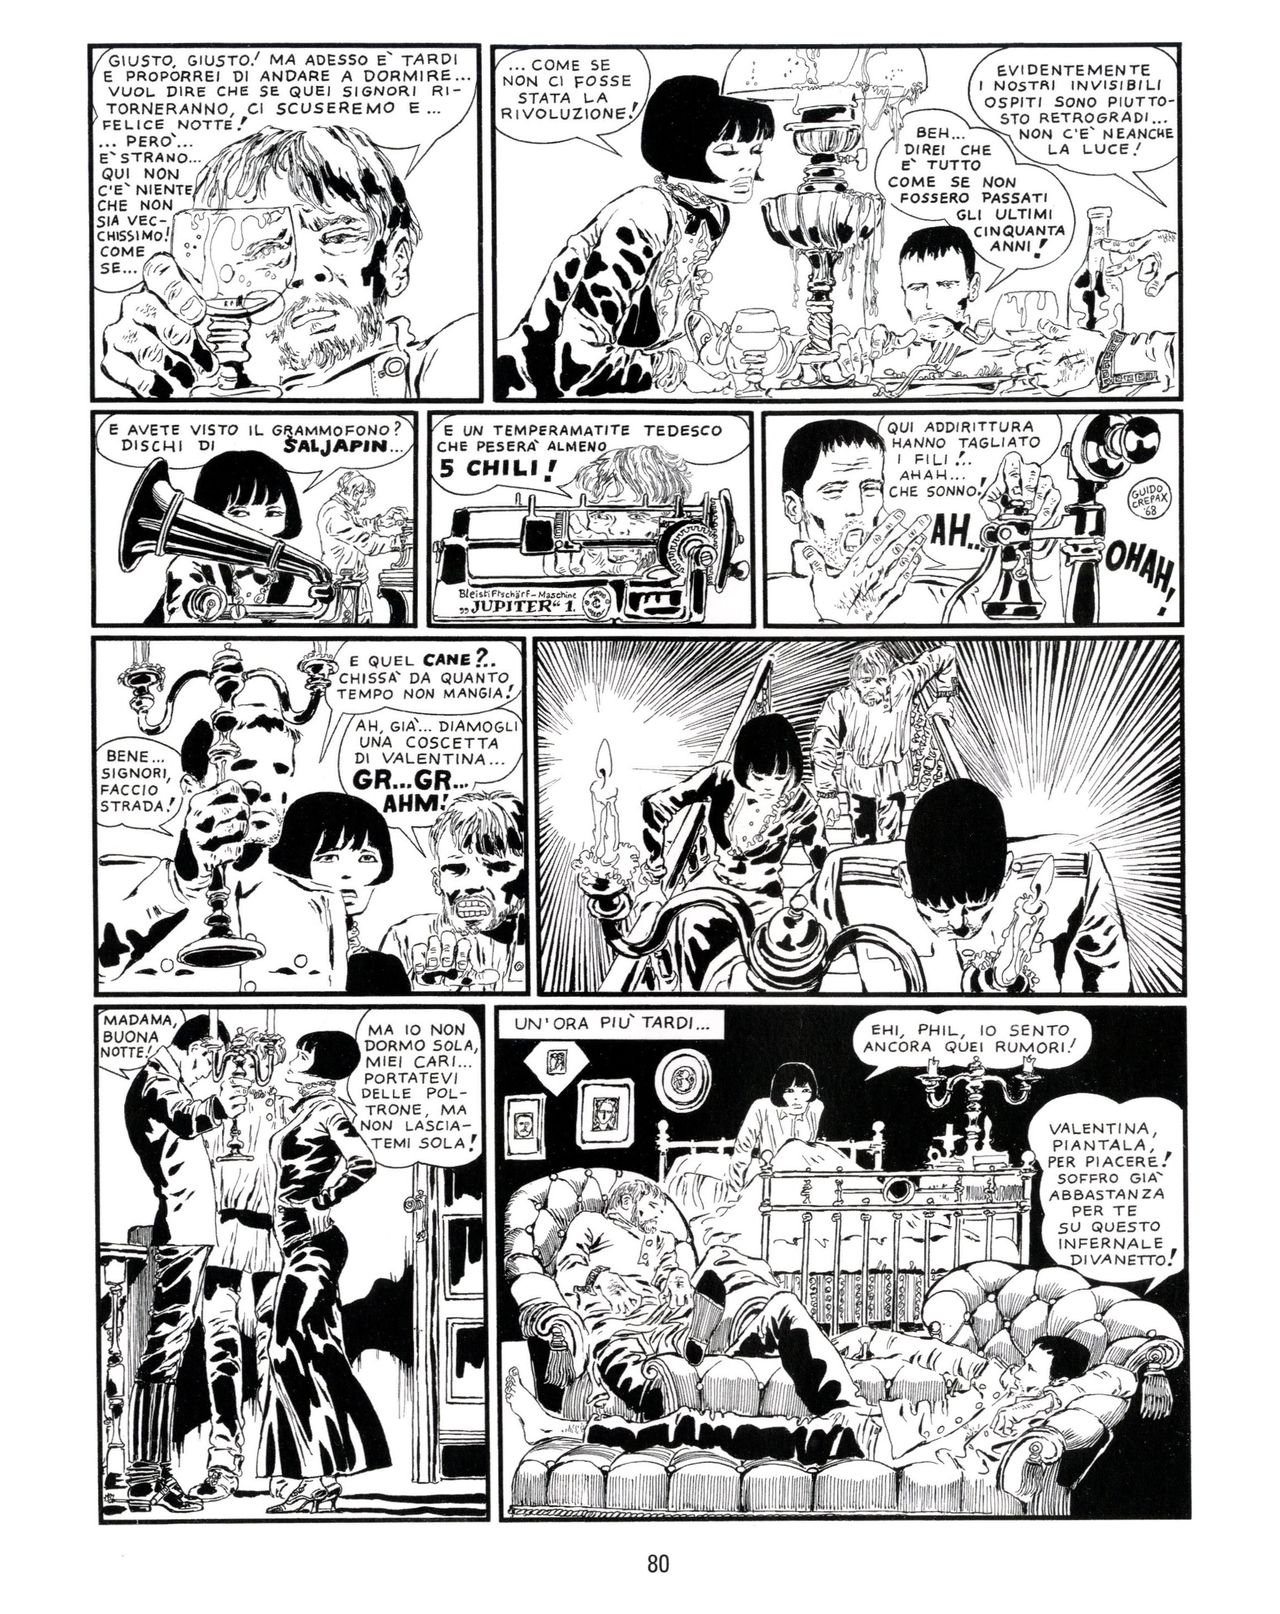 [Guido Crepax] Erotica Fumetti #25 : L'ascesa dei sotterranei : I cavalieri ciechi [Italian] 81